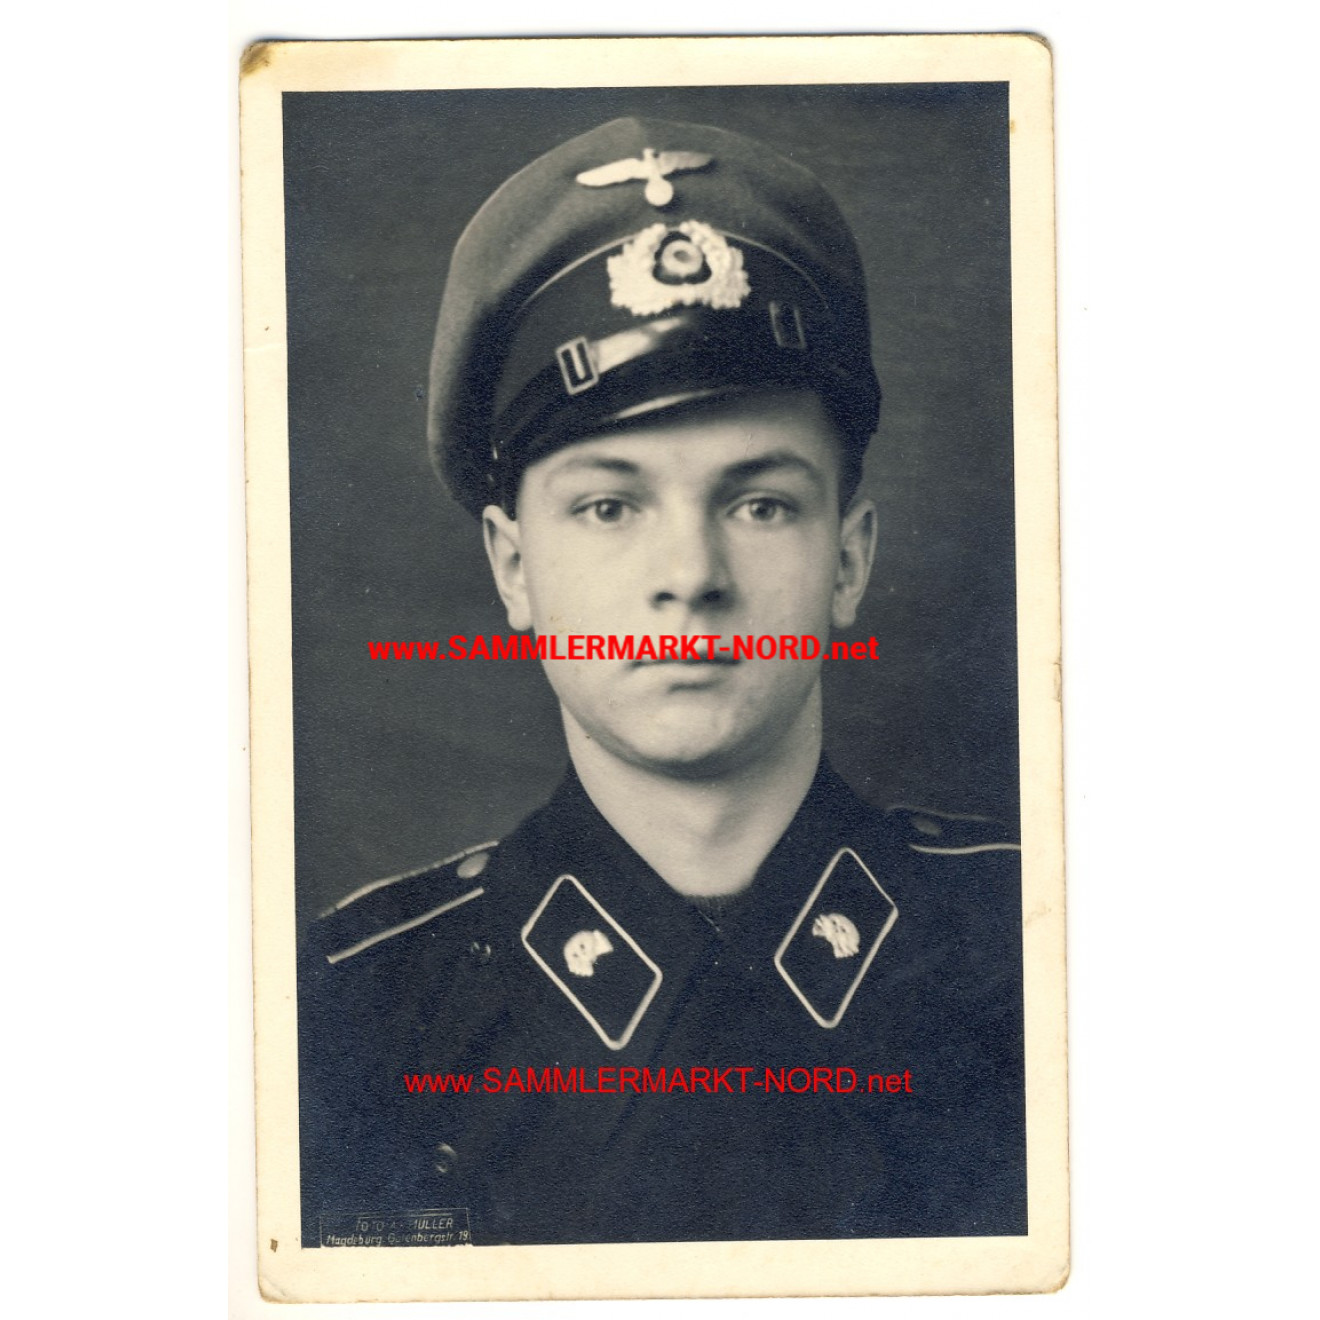 German tank soldier with visor cap